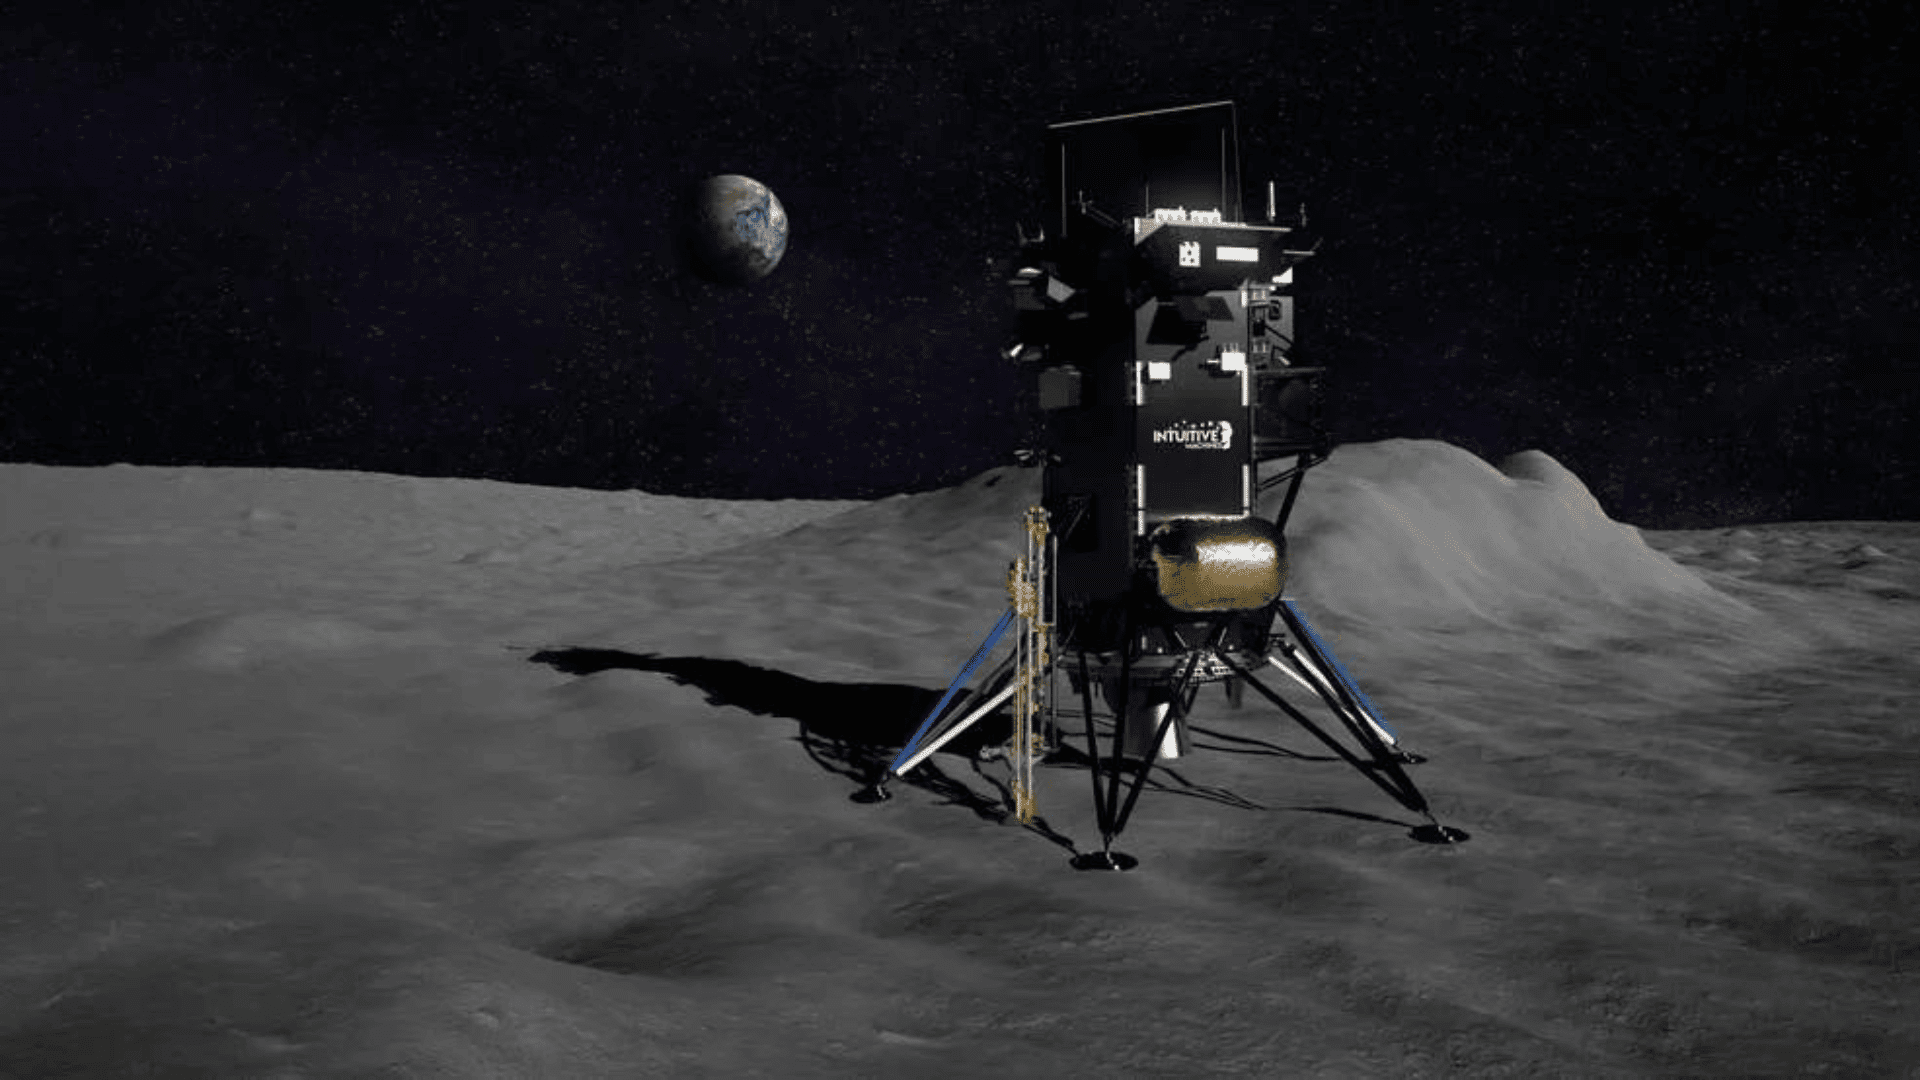 An illustration of the private Nova-C moon lander